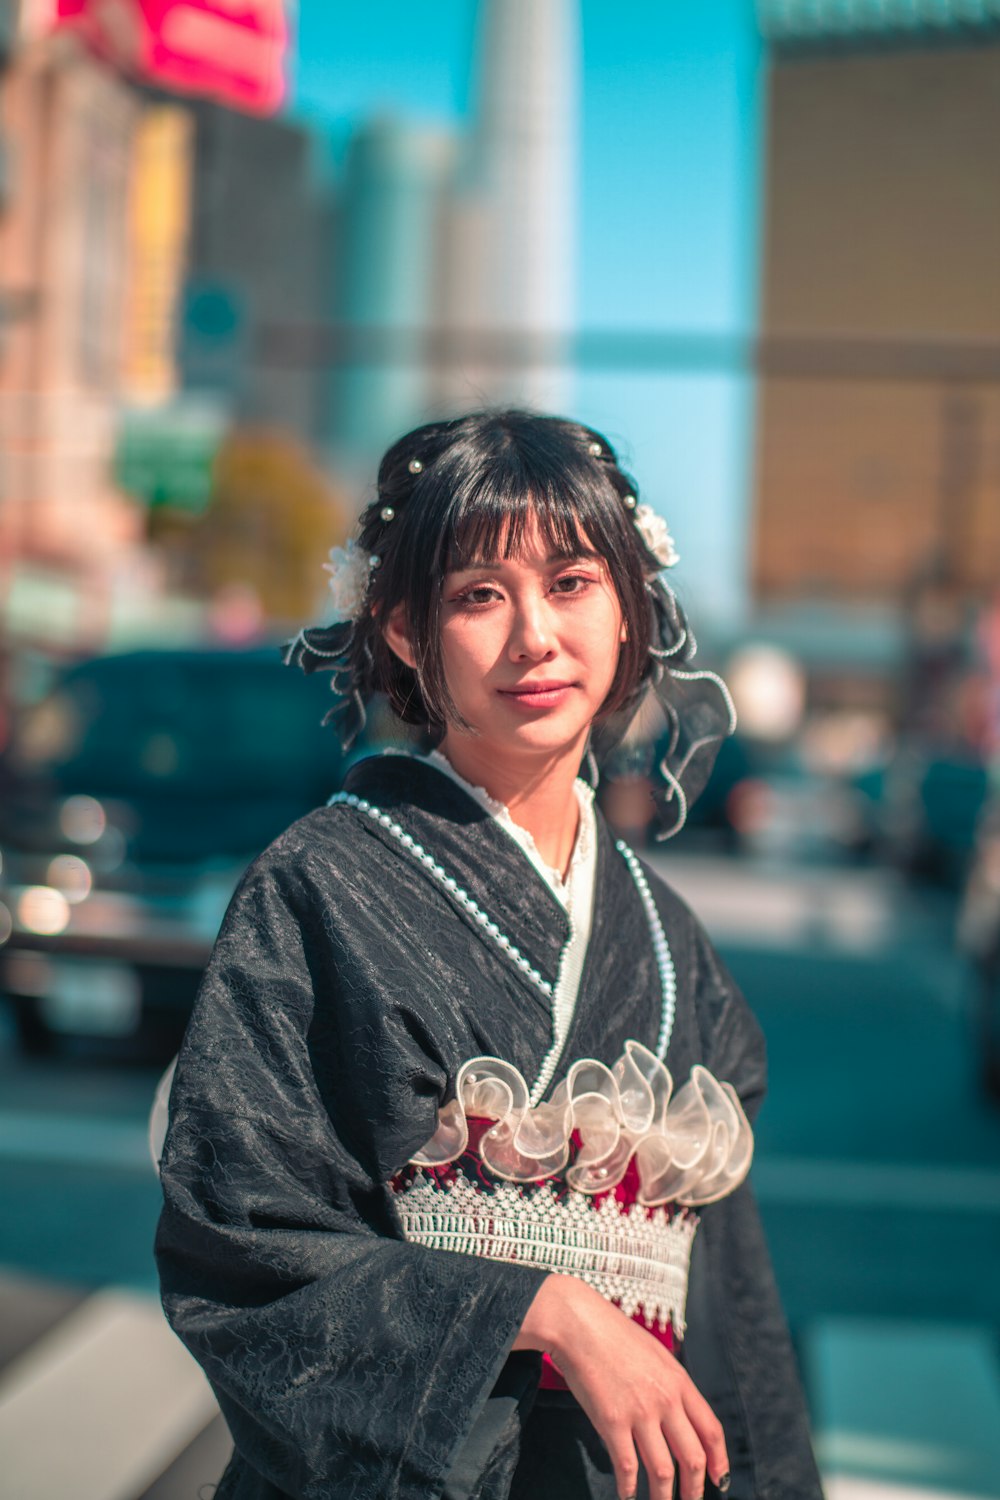 a woman in a kimono standing on a street corner